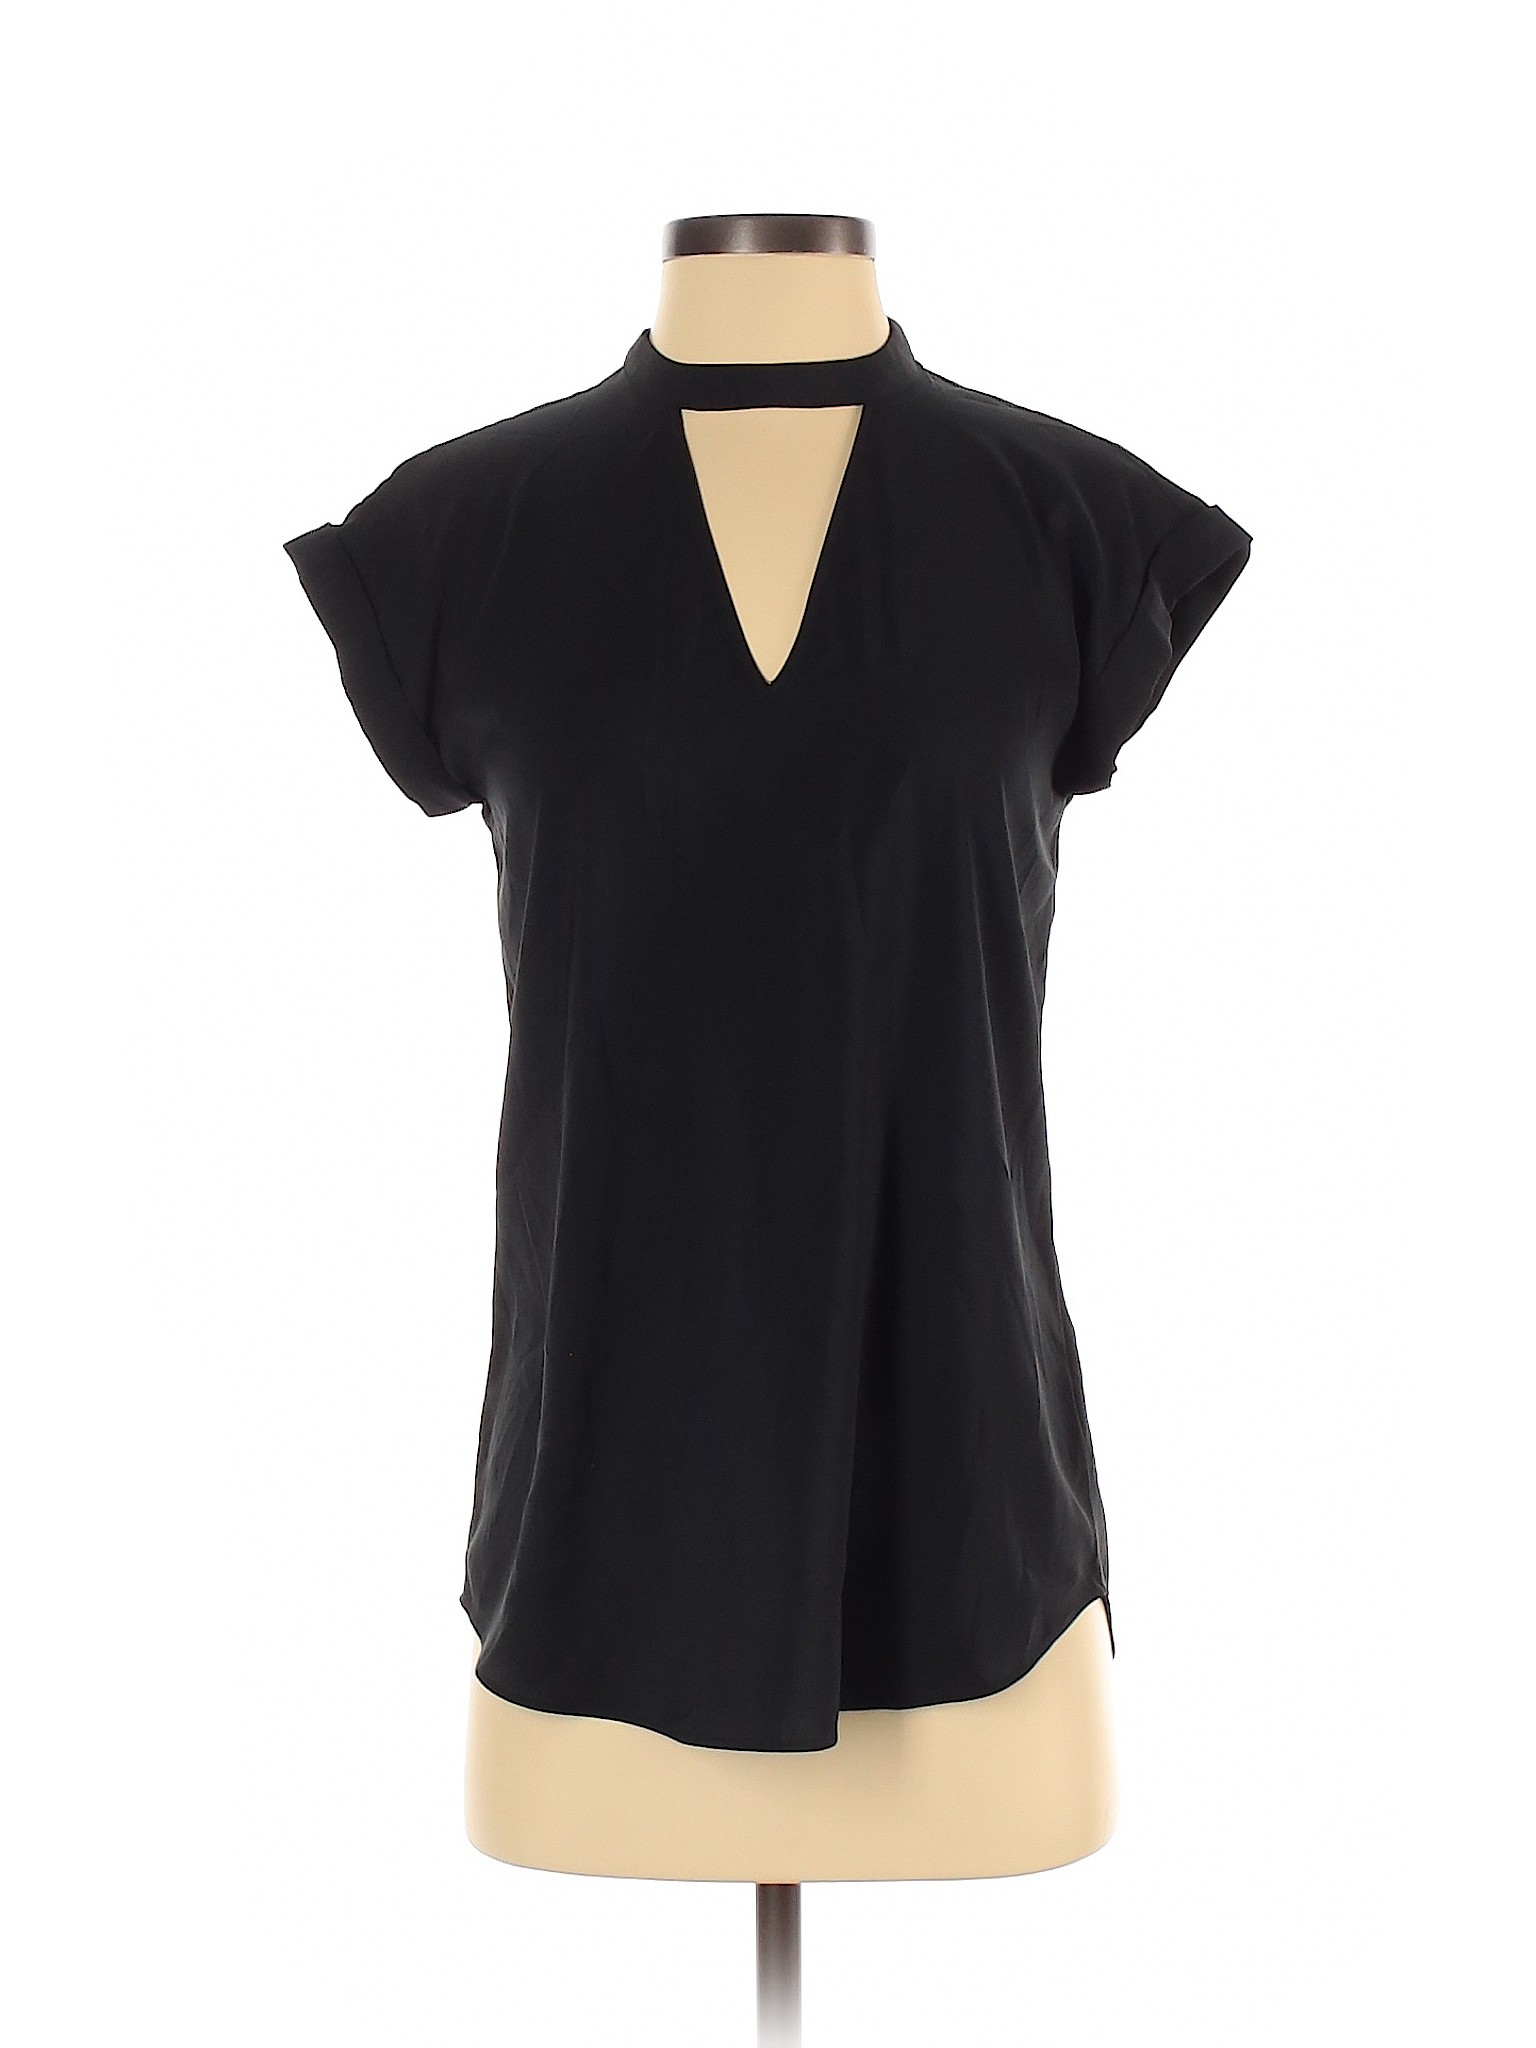 Express Women Black Short Sleeve Blouse XS | eBay